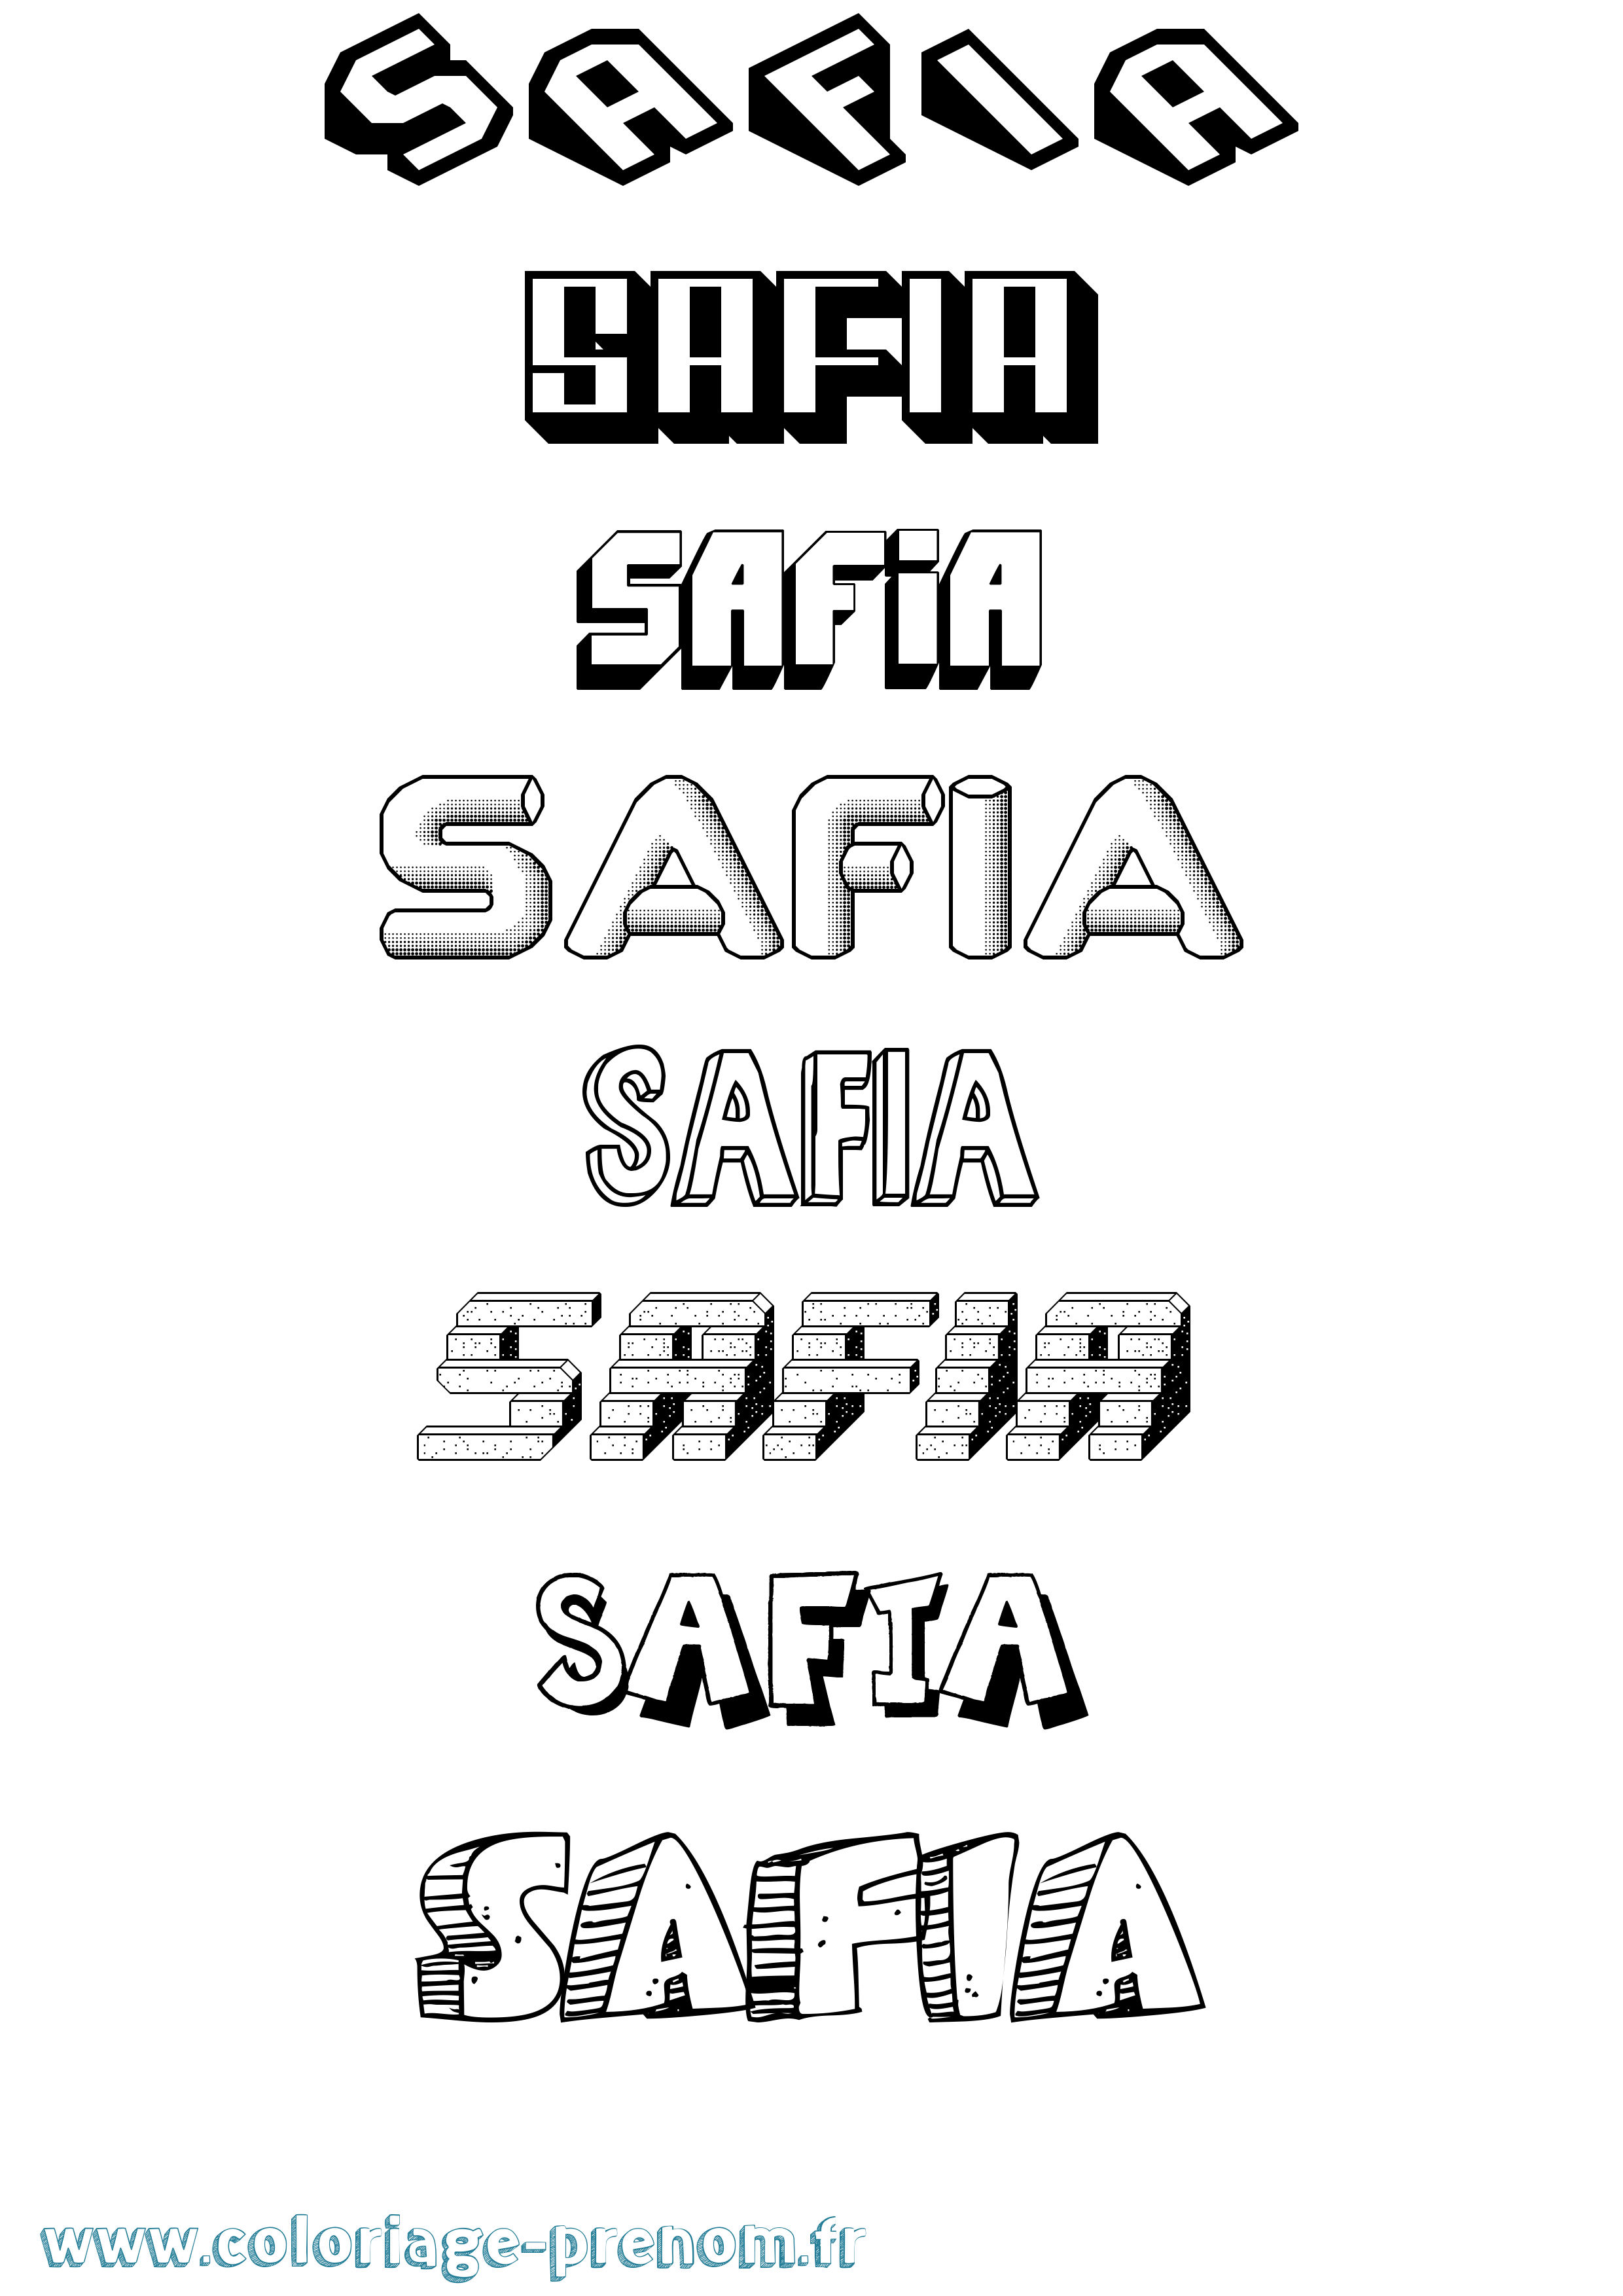 Coloriage prénom Safia Effet 3D